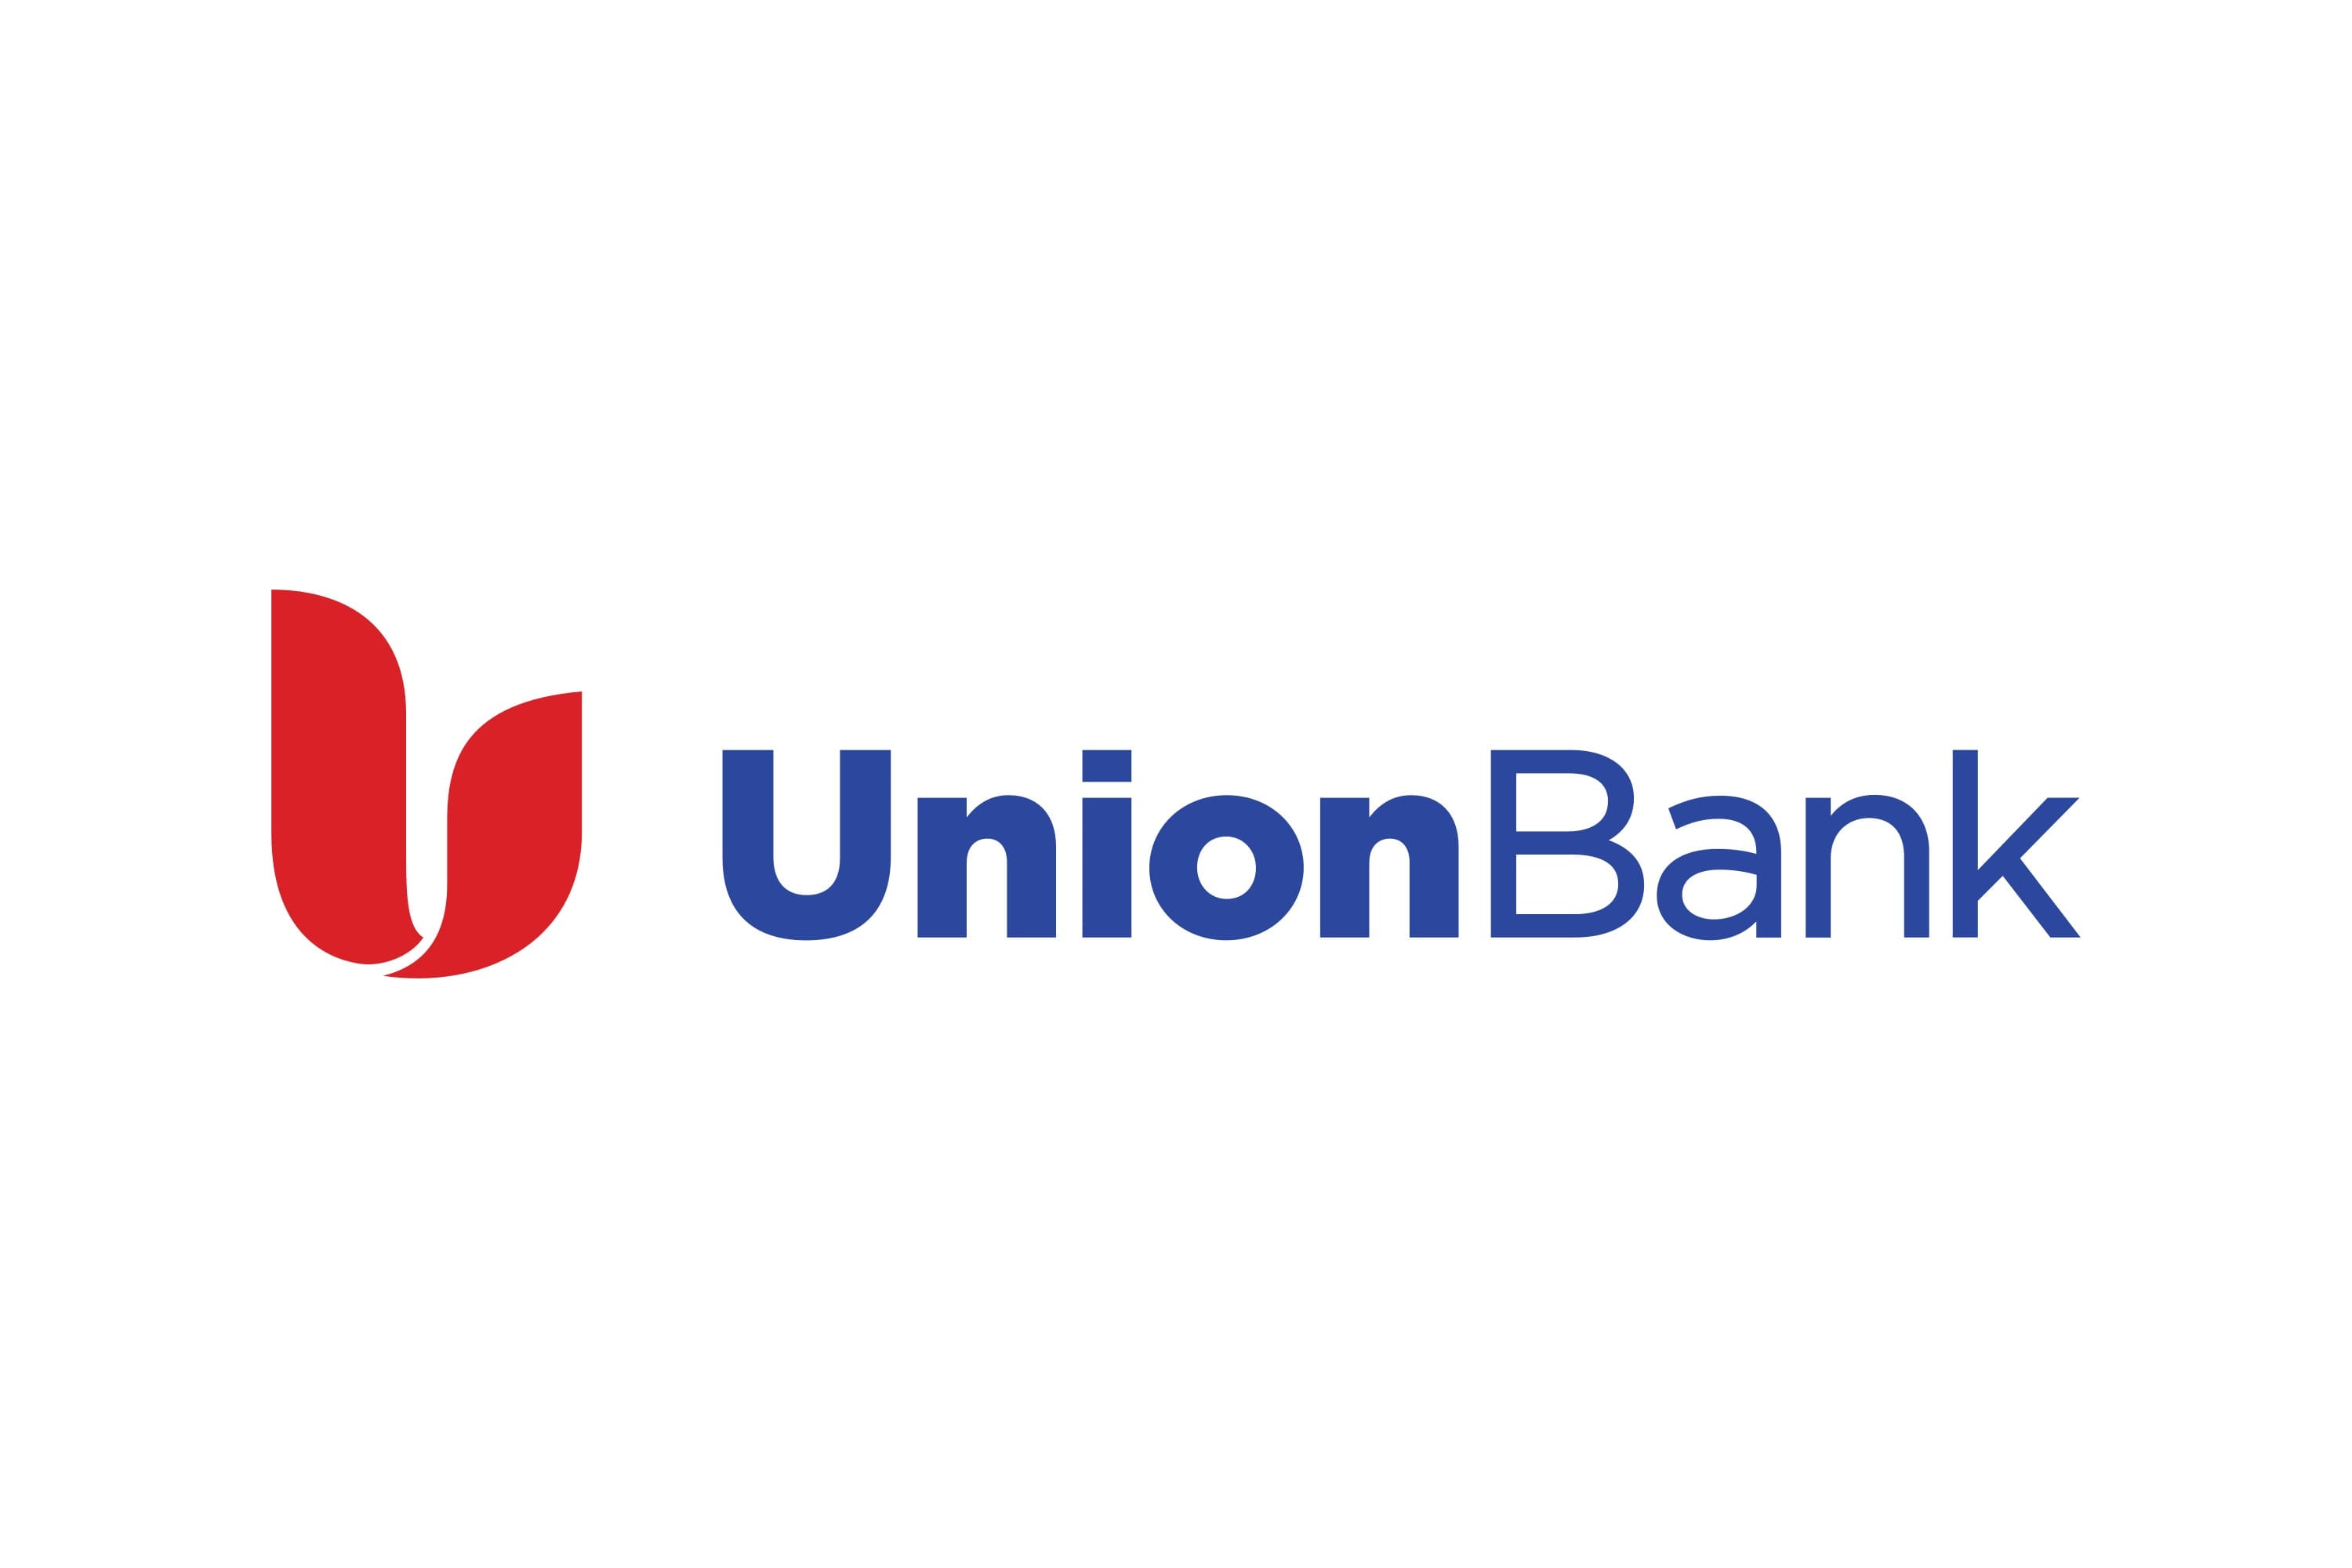 Union Bank Logo - MUFG Union Bank Logo and symbol